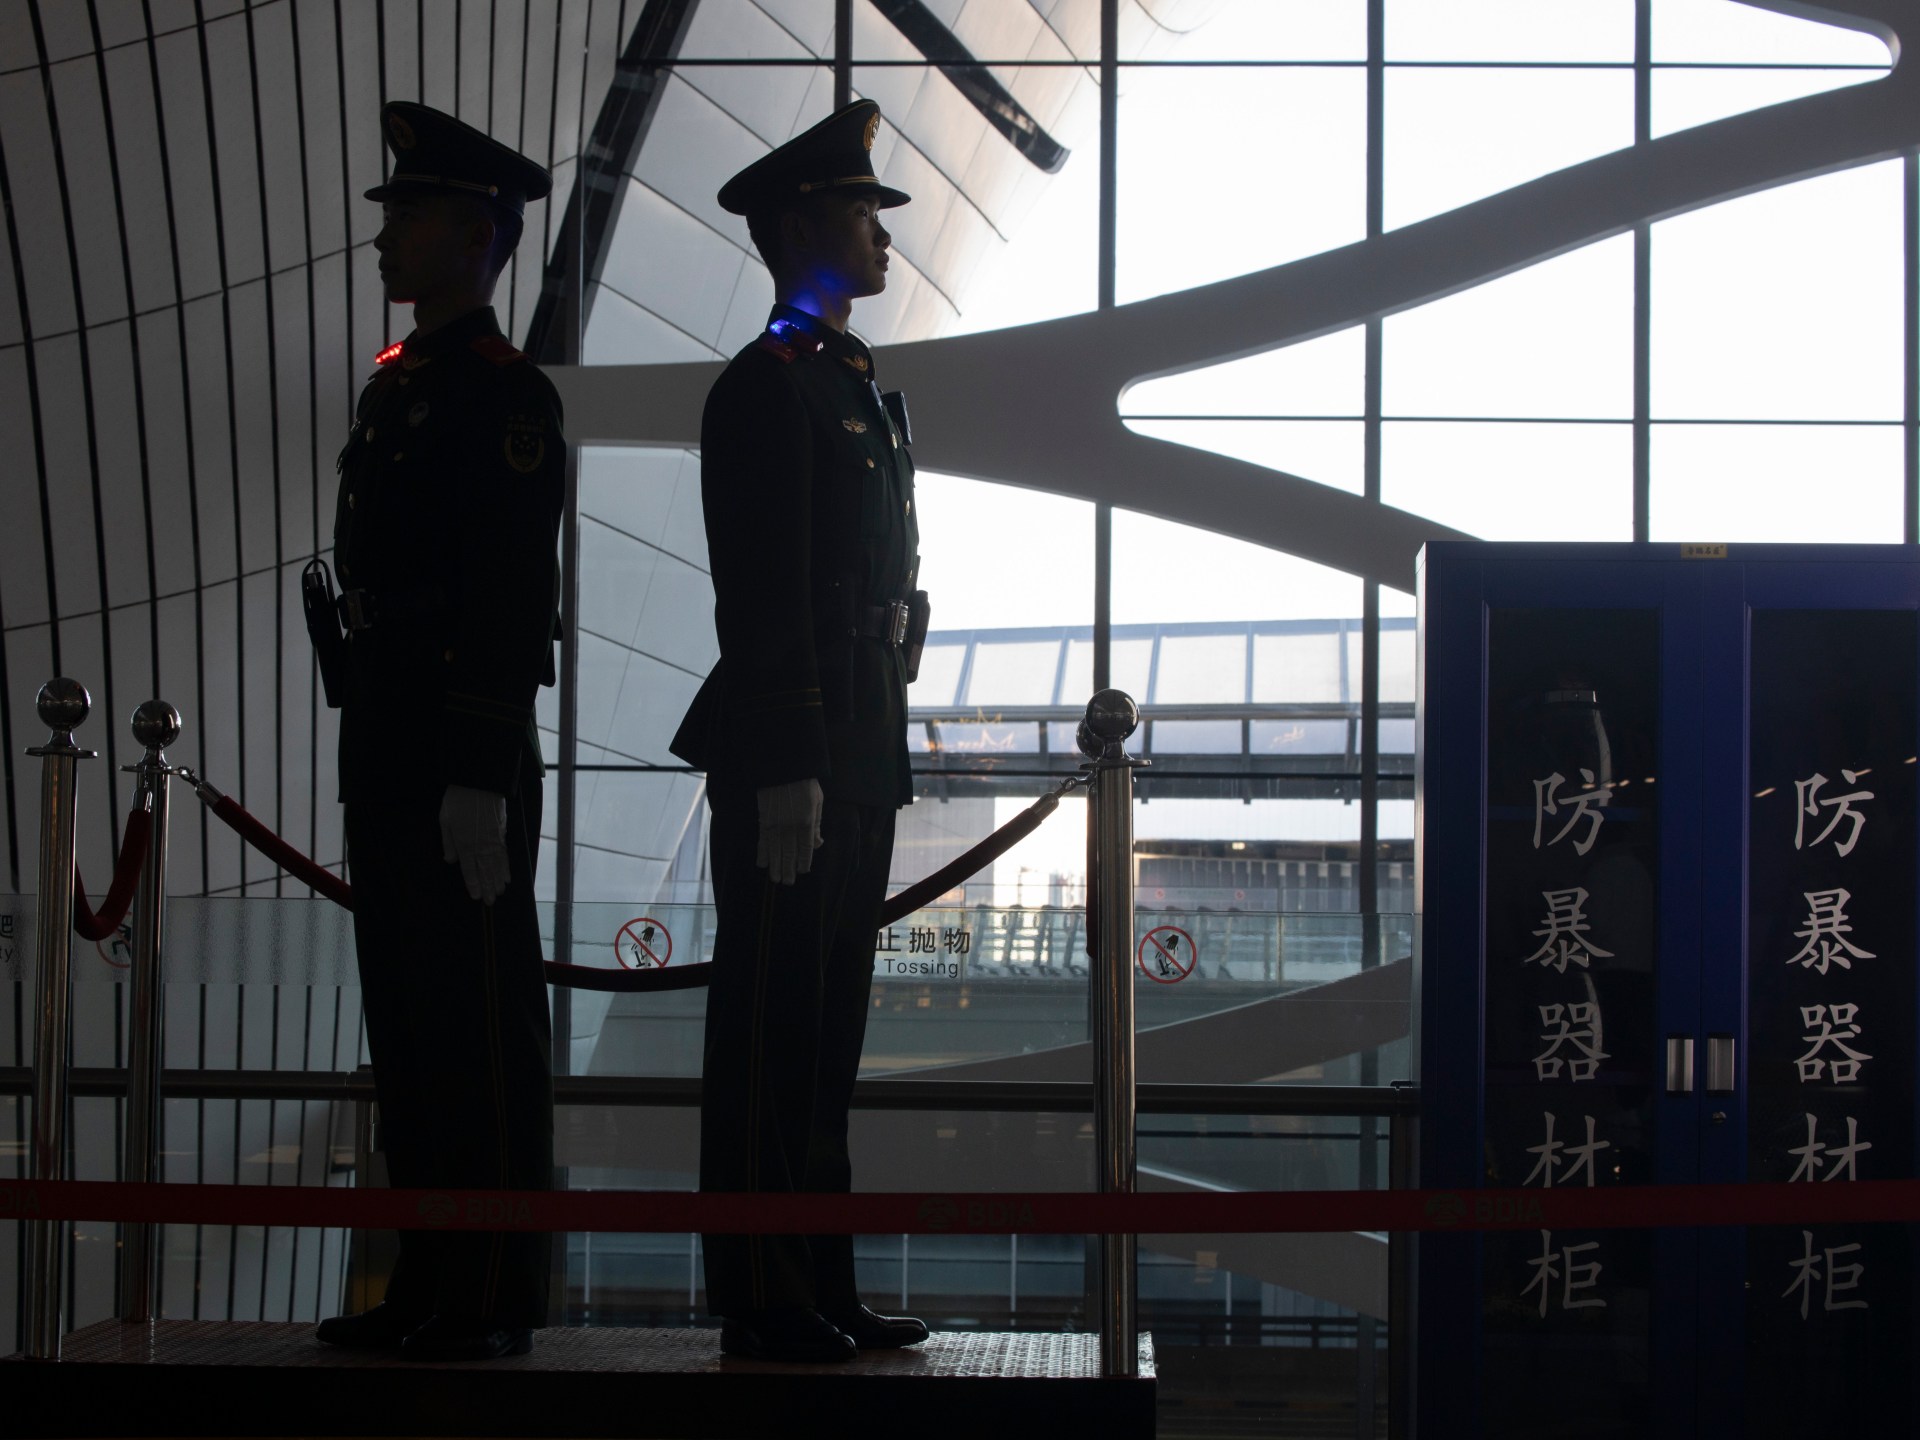 Cina meningkatkan penggunaan ‘larangan keluar’ terhadap kritik pemerintah |  Berita Hak Asasi Manusia